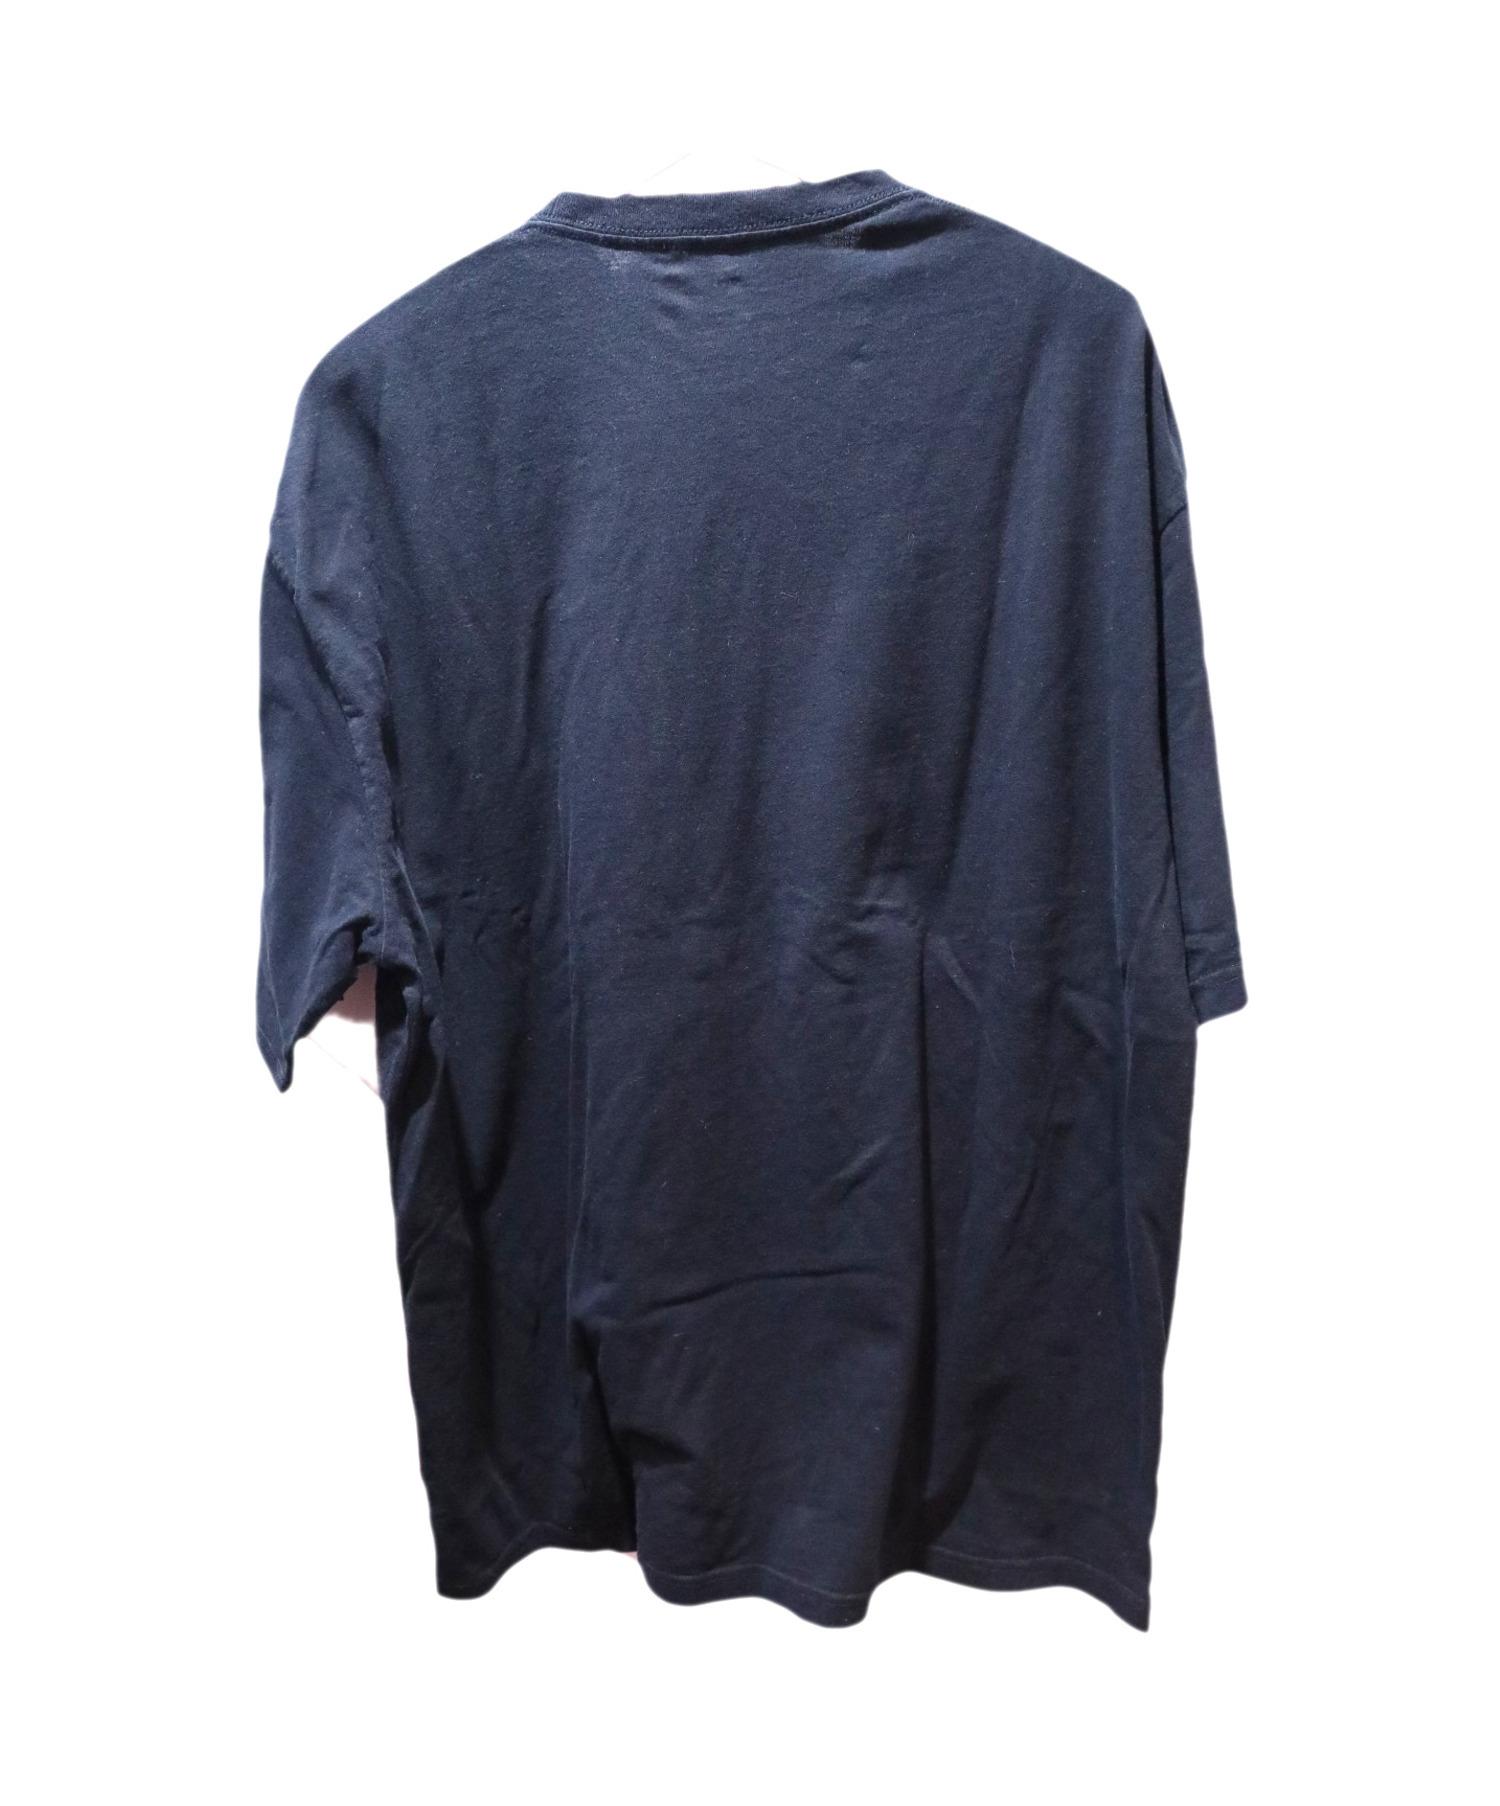 BALENCIAGA (バレンシアガ) BBロゴ プリントTシャツ ブラック サイズ:M 19SS